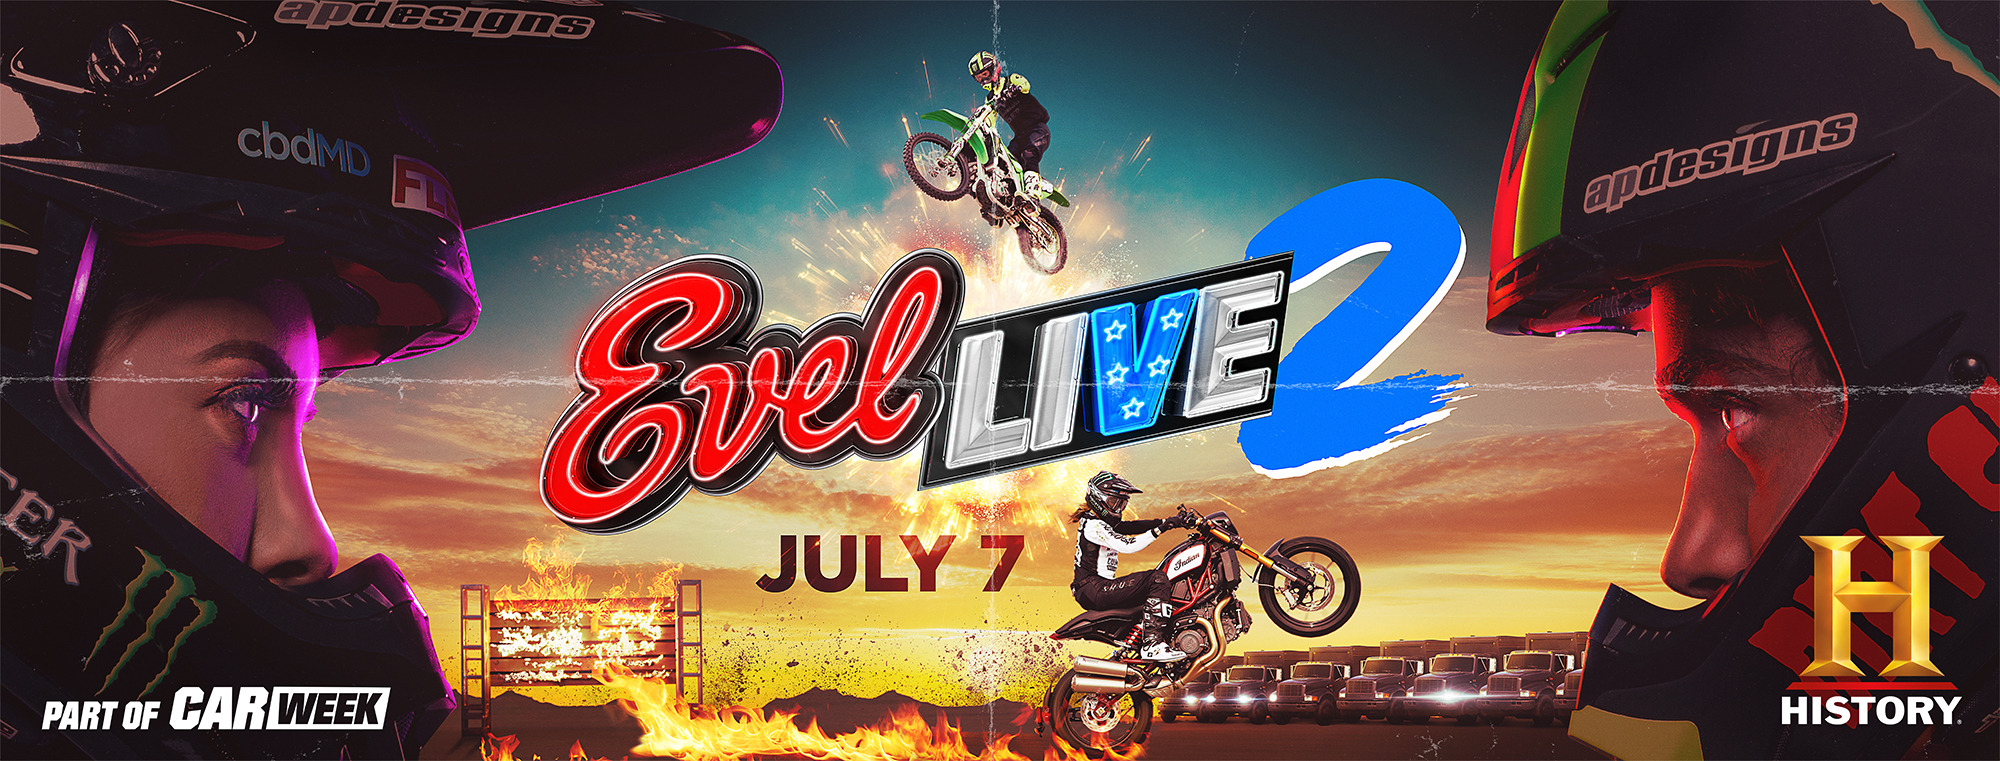 Mega Sized TV Poster Image for Evel Live 2 